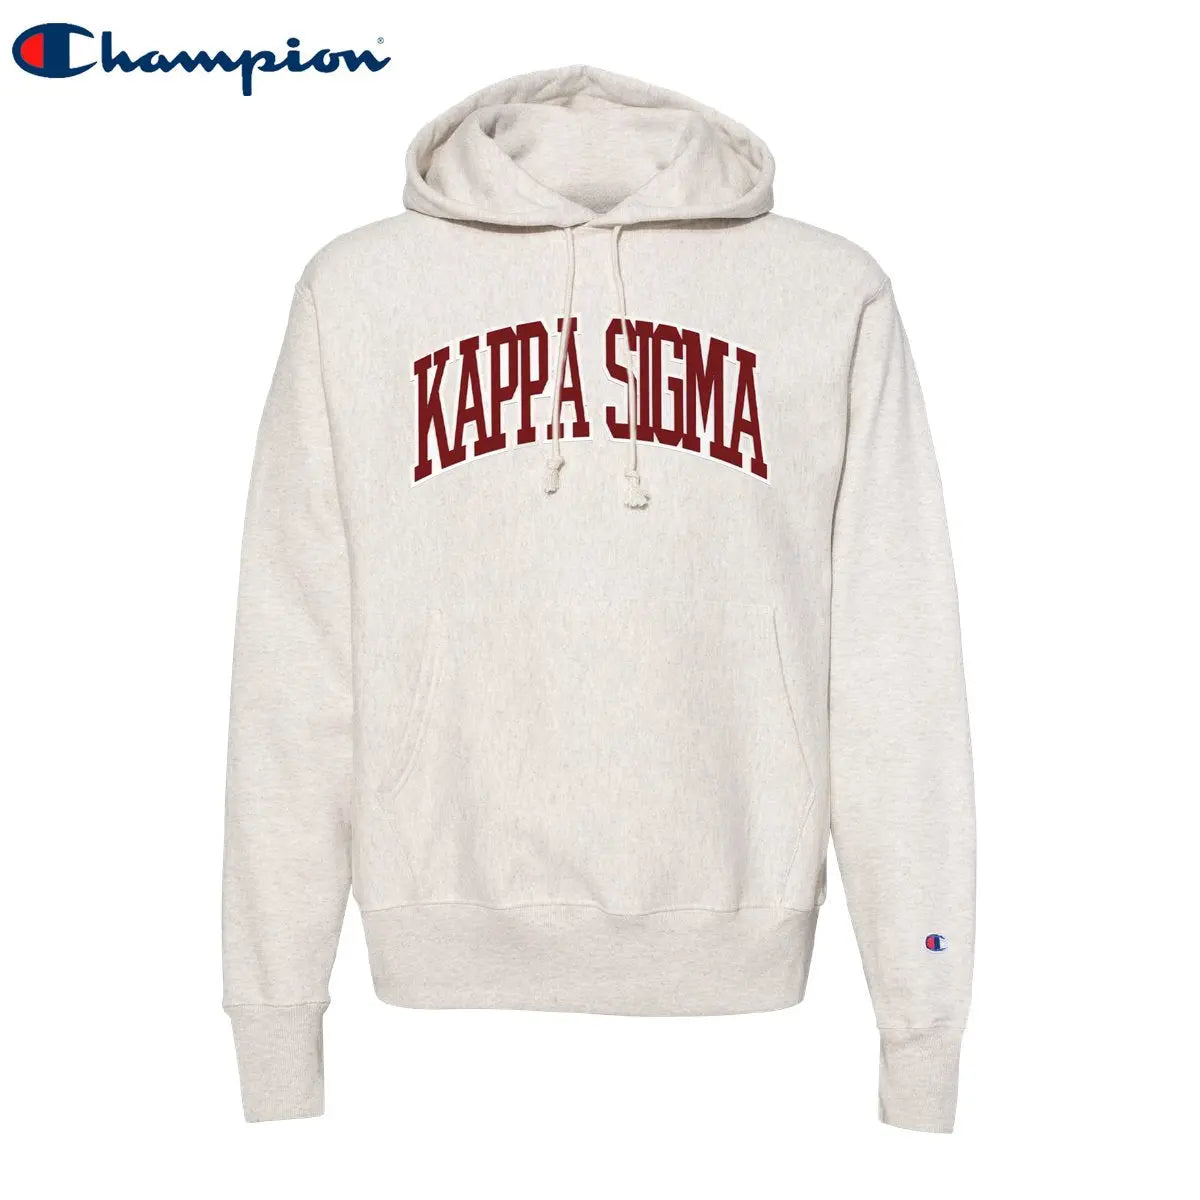 Kappa Sig Natural Champion Reverse Weave Sewn On Hoodie - Kappa Sigma Official Store